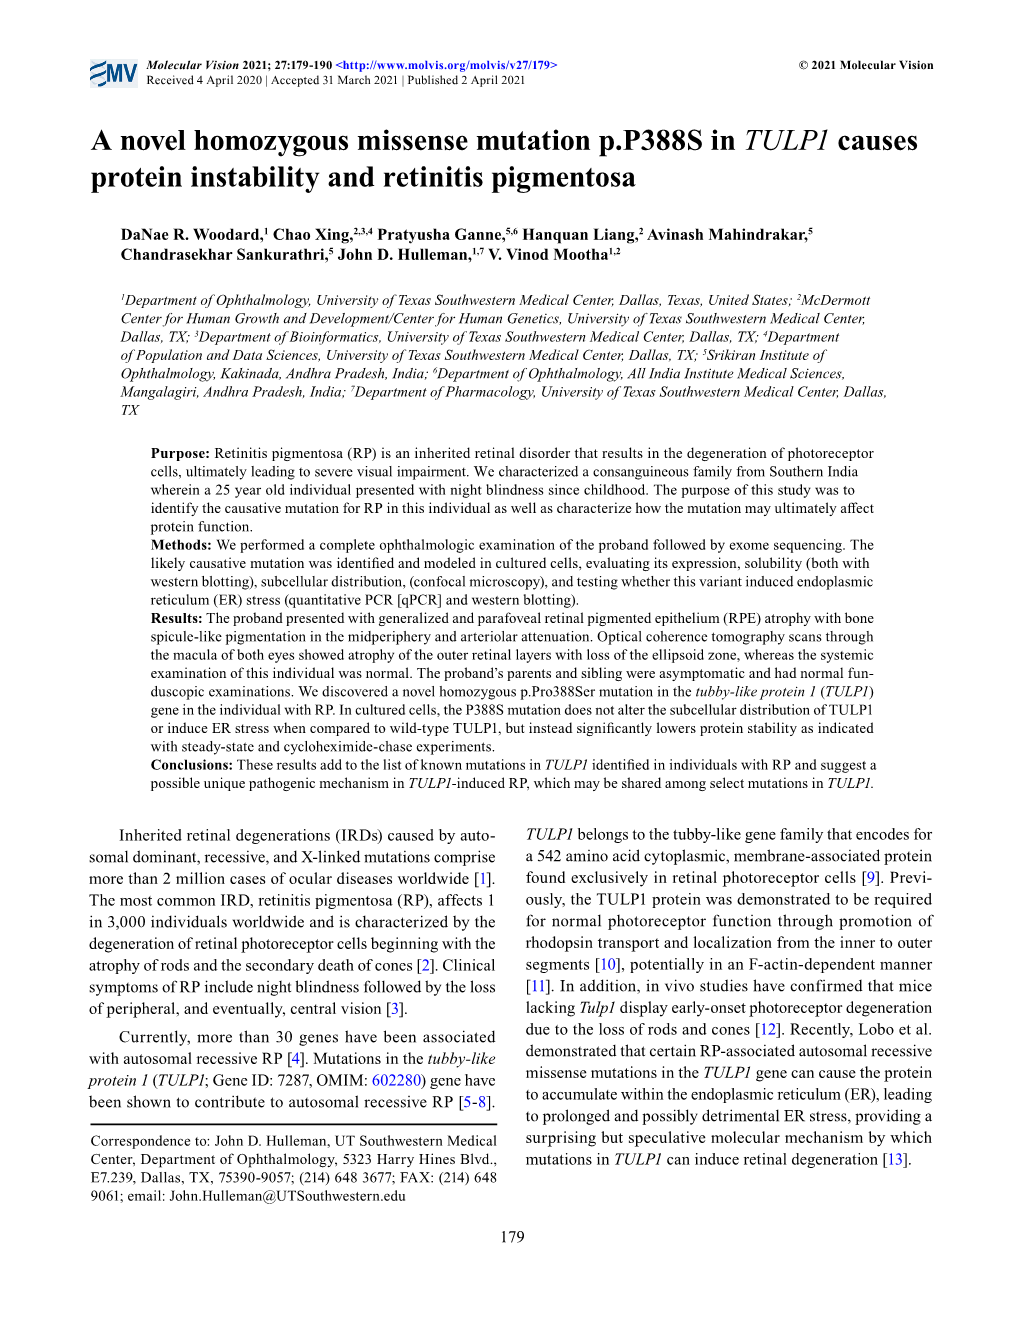 A Novel Homozygous Missense Mutation P.P388S in TULP1 Causes Protein Instability and Retinitis Pigmentosa